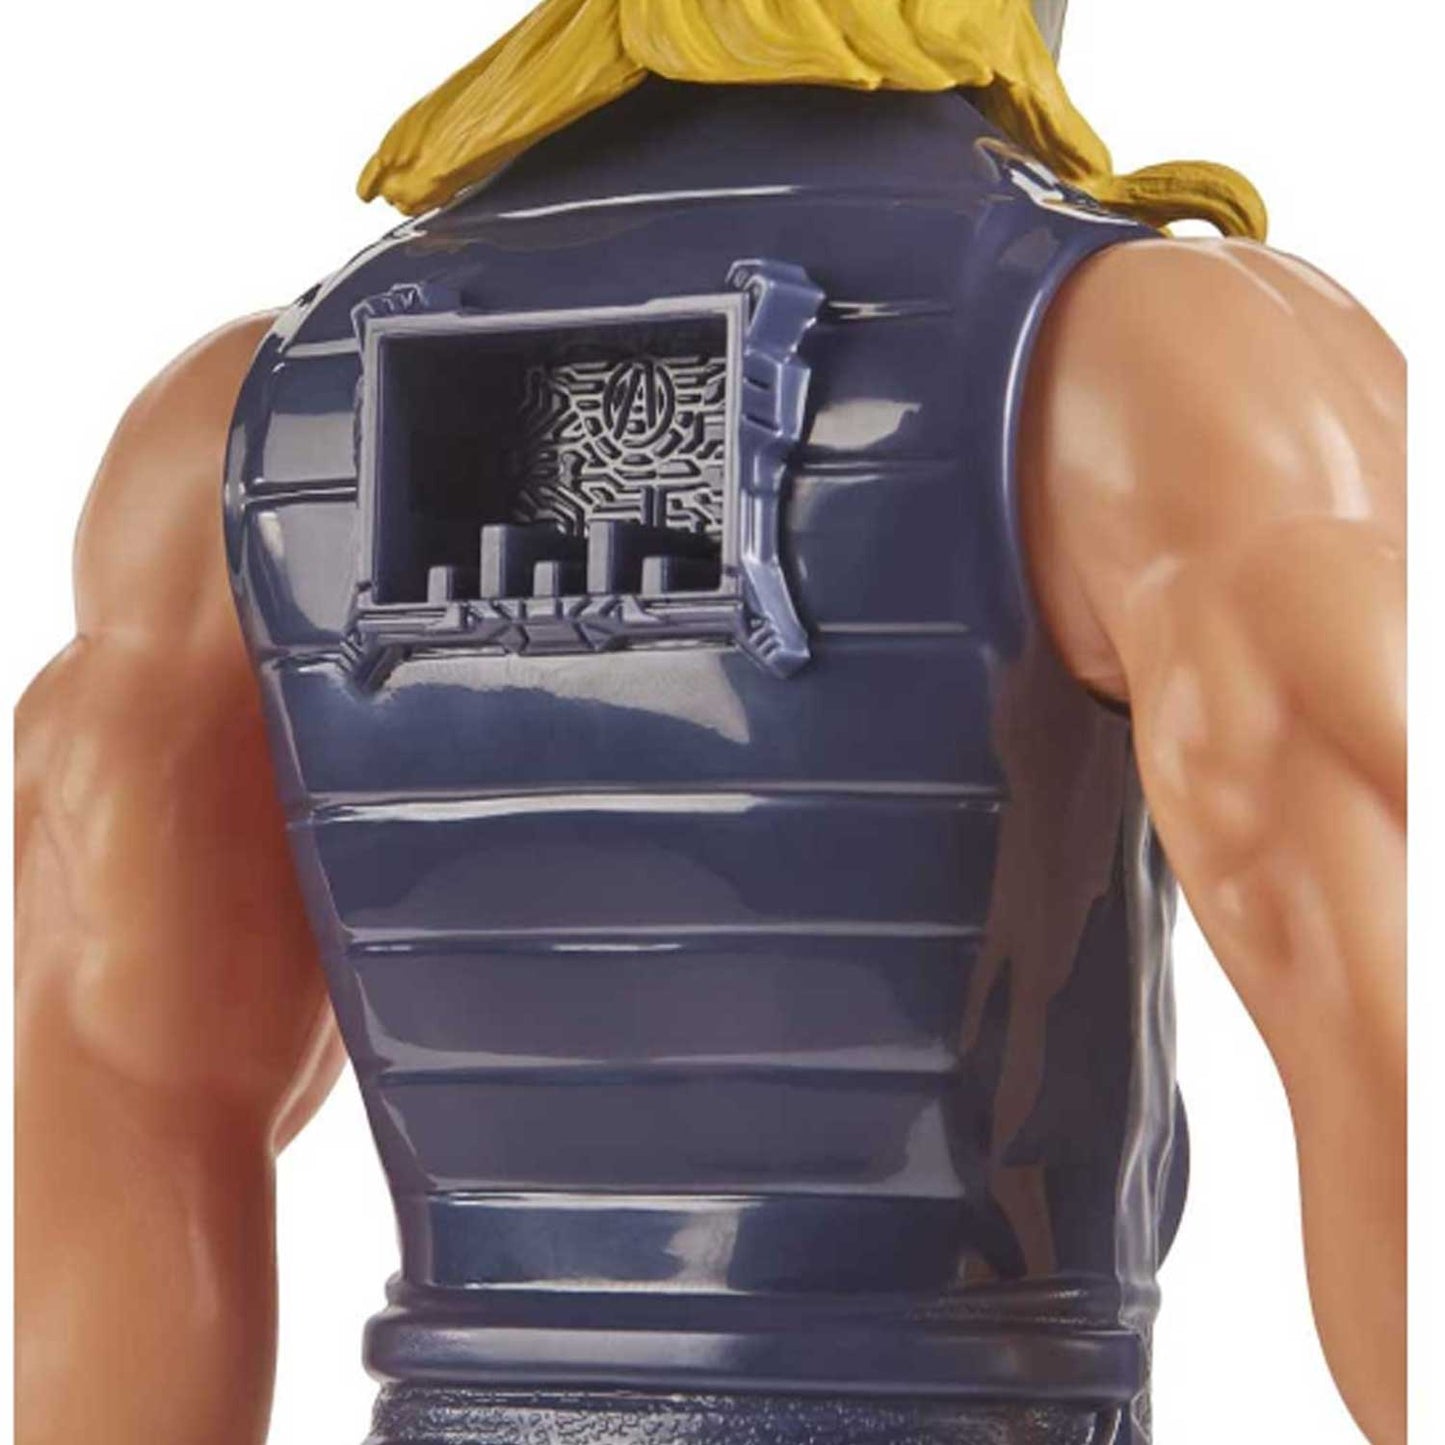 Hasbro - Avengers Personaggo Titan Hero 30cm - Thor E7879ES0